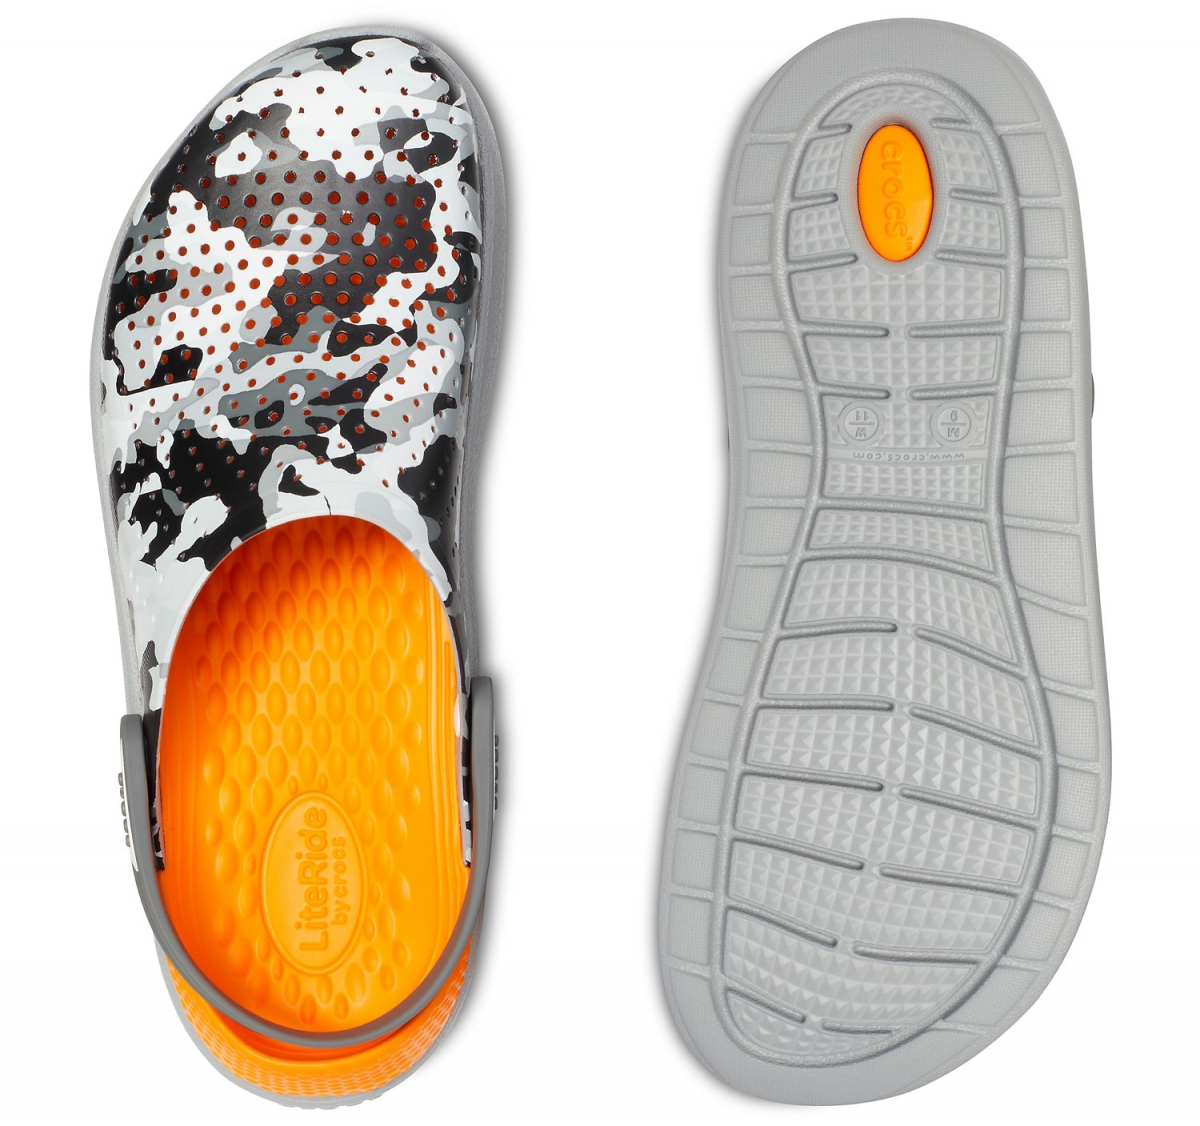 Pantofle Crocs LiteRide Graphic Clog se snadnou údržbou